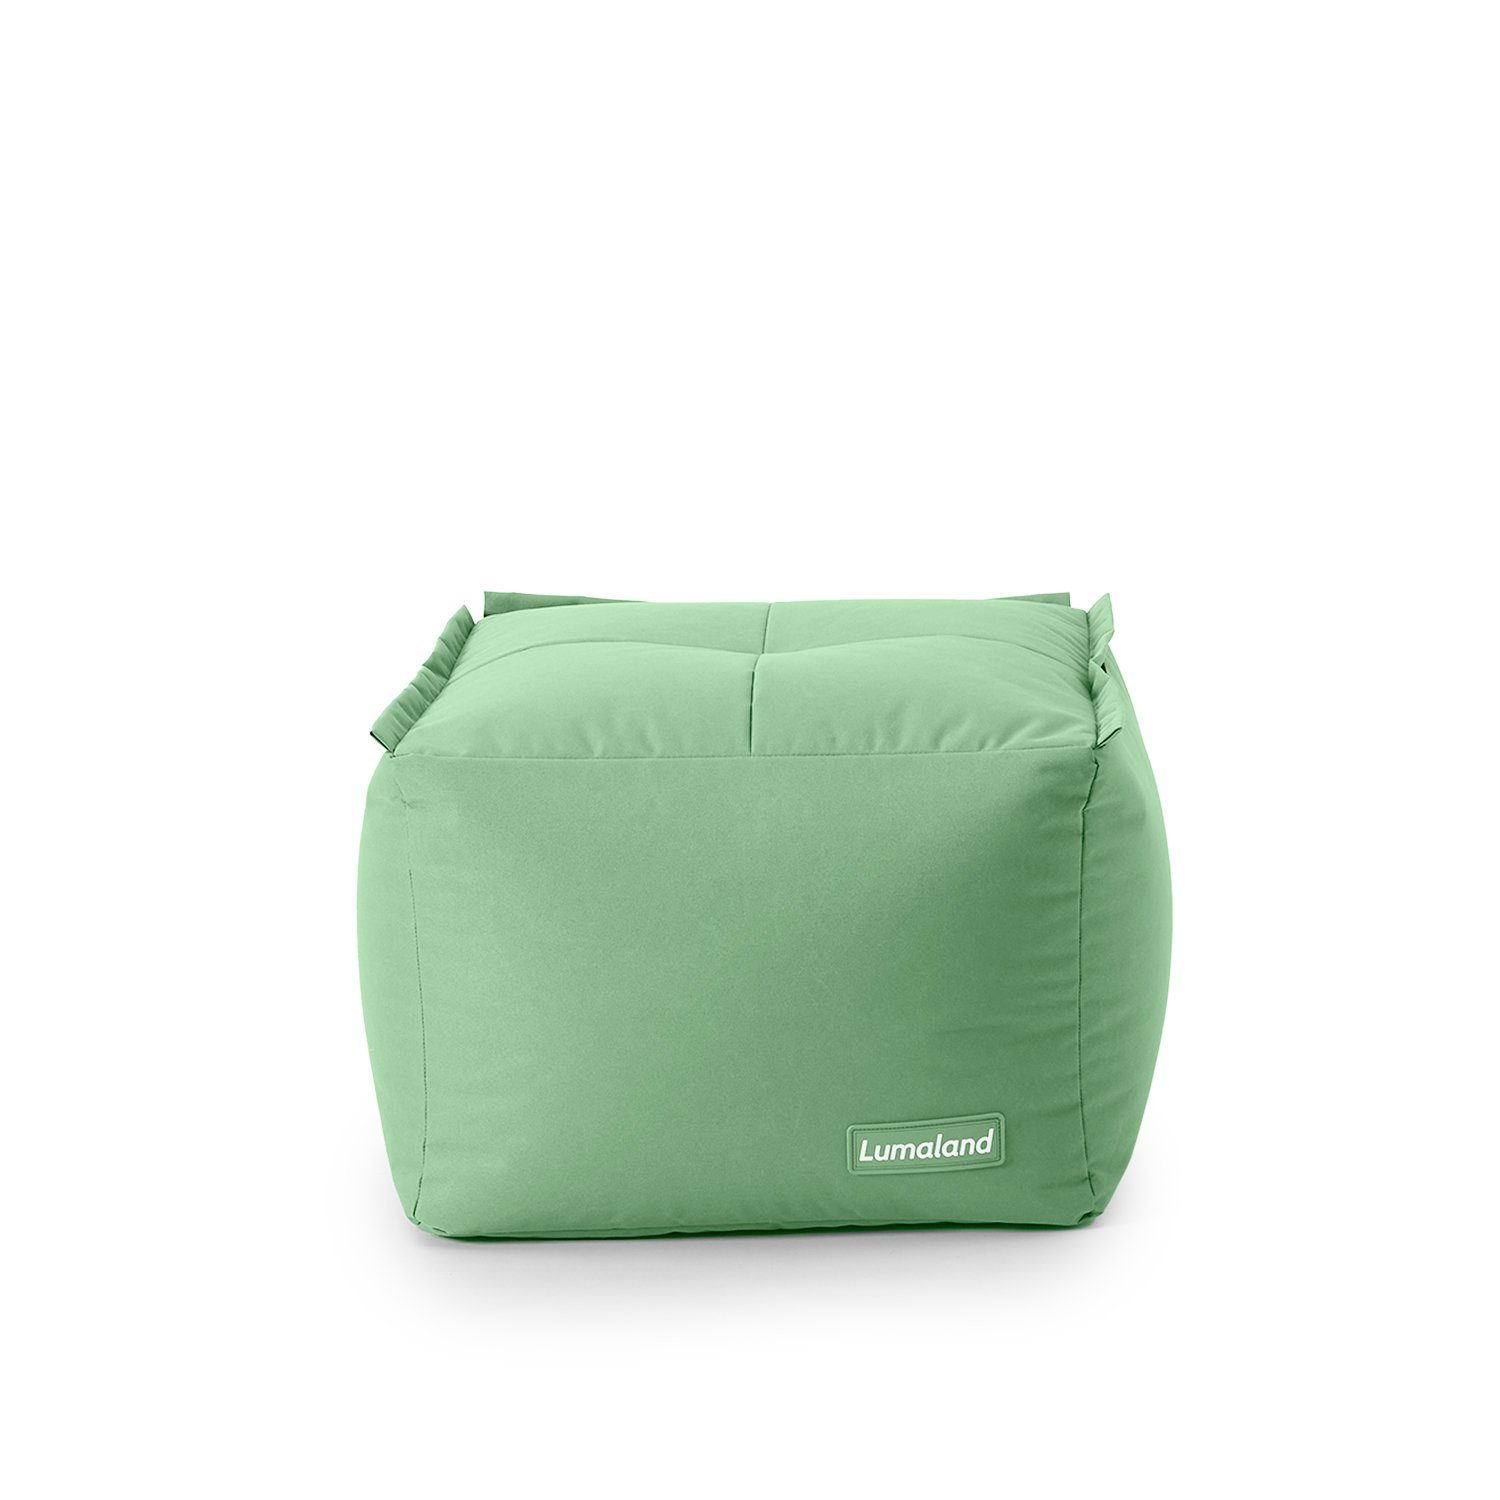 Lumaland Loungeset In- & outdoor Sofa individuell kombinierbar mit dem Modularen System, Sessel wasserfest abnehmbarer Bezug erweiterbar waschbar pastellgrün